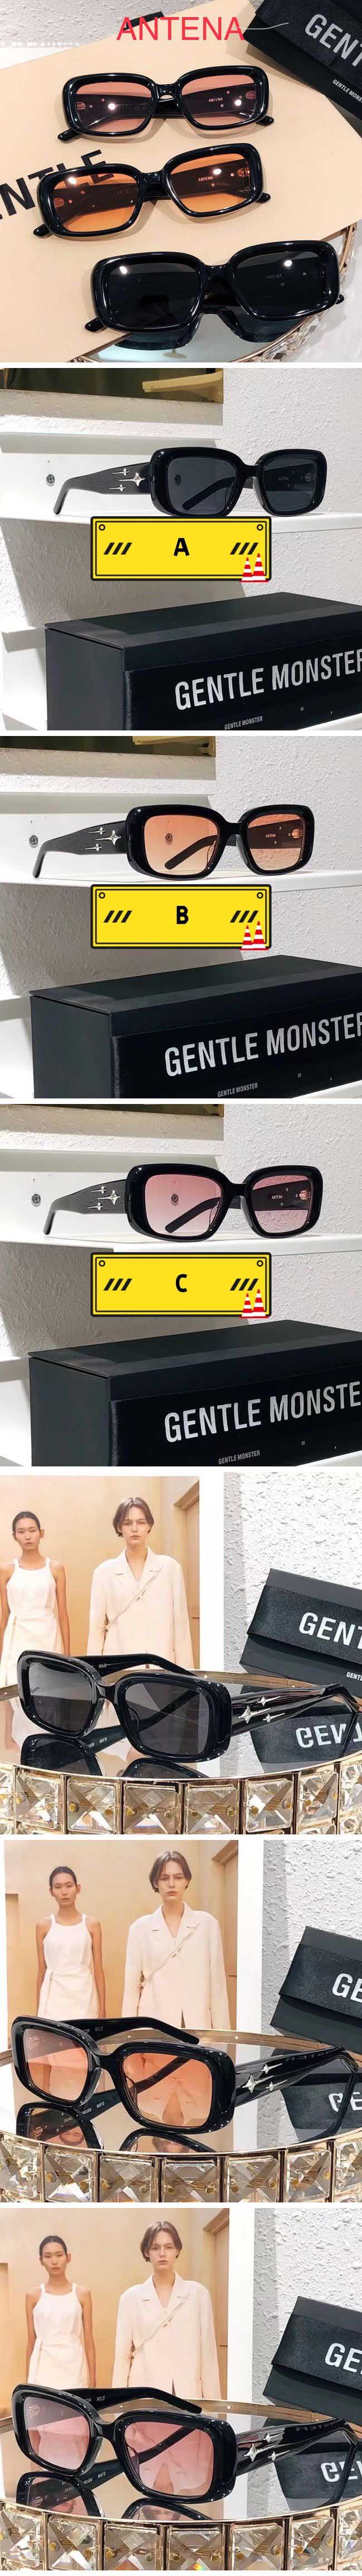 Gentle Monster Antena ジェントルモンスター アンテナ サングラス